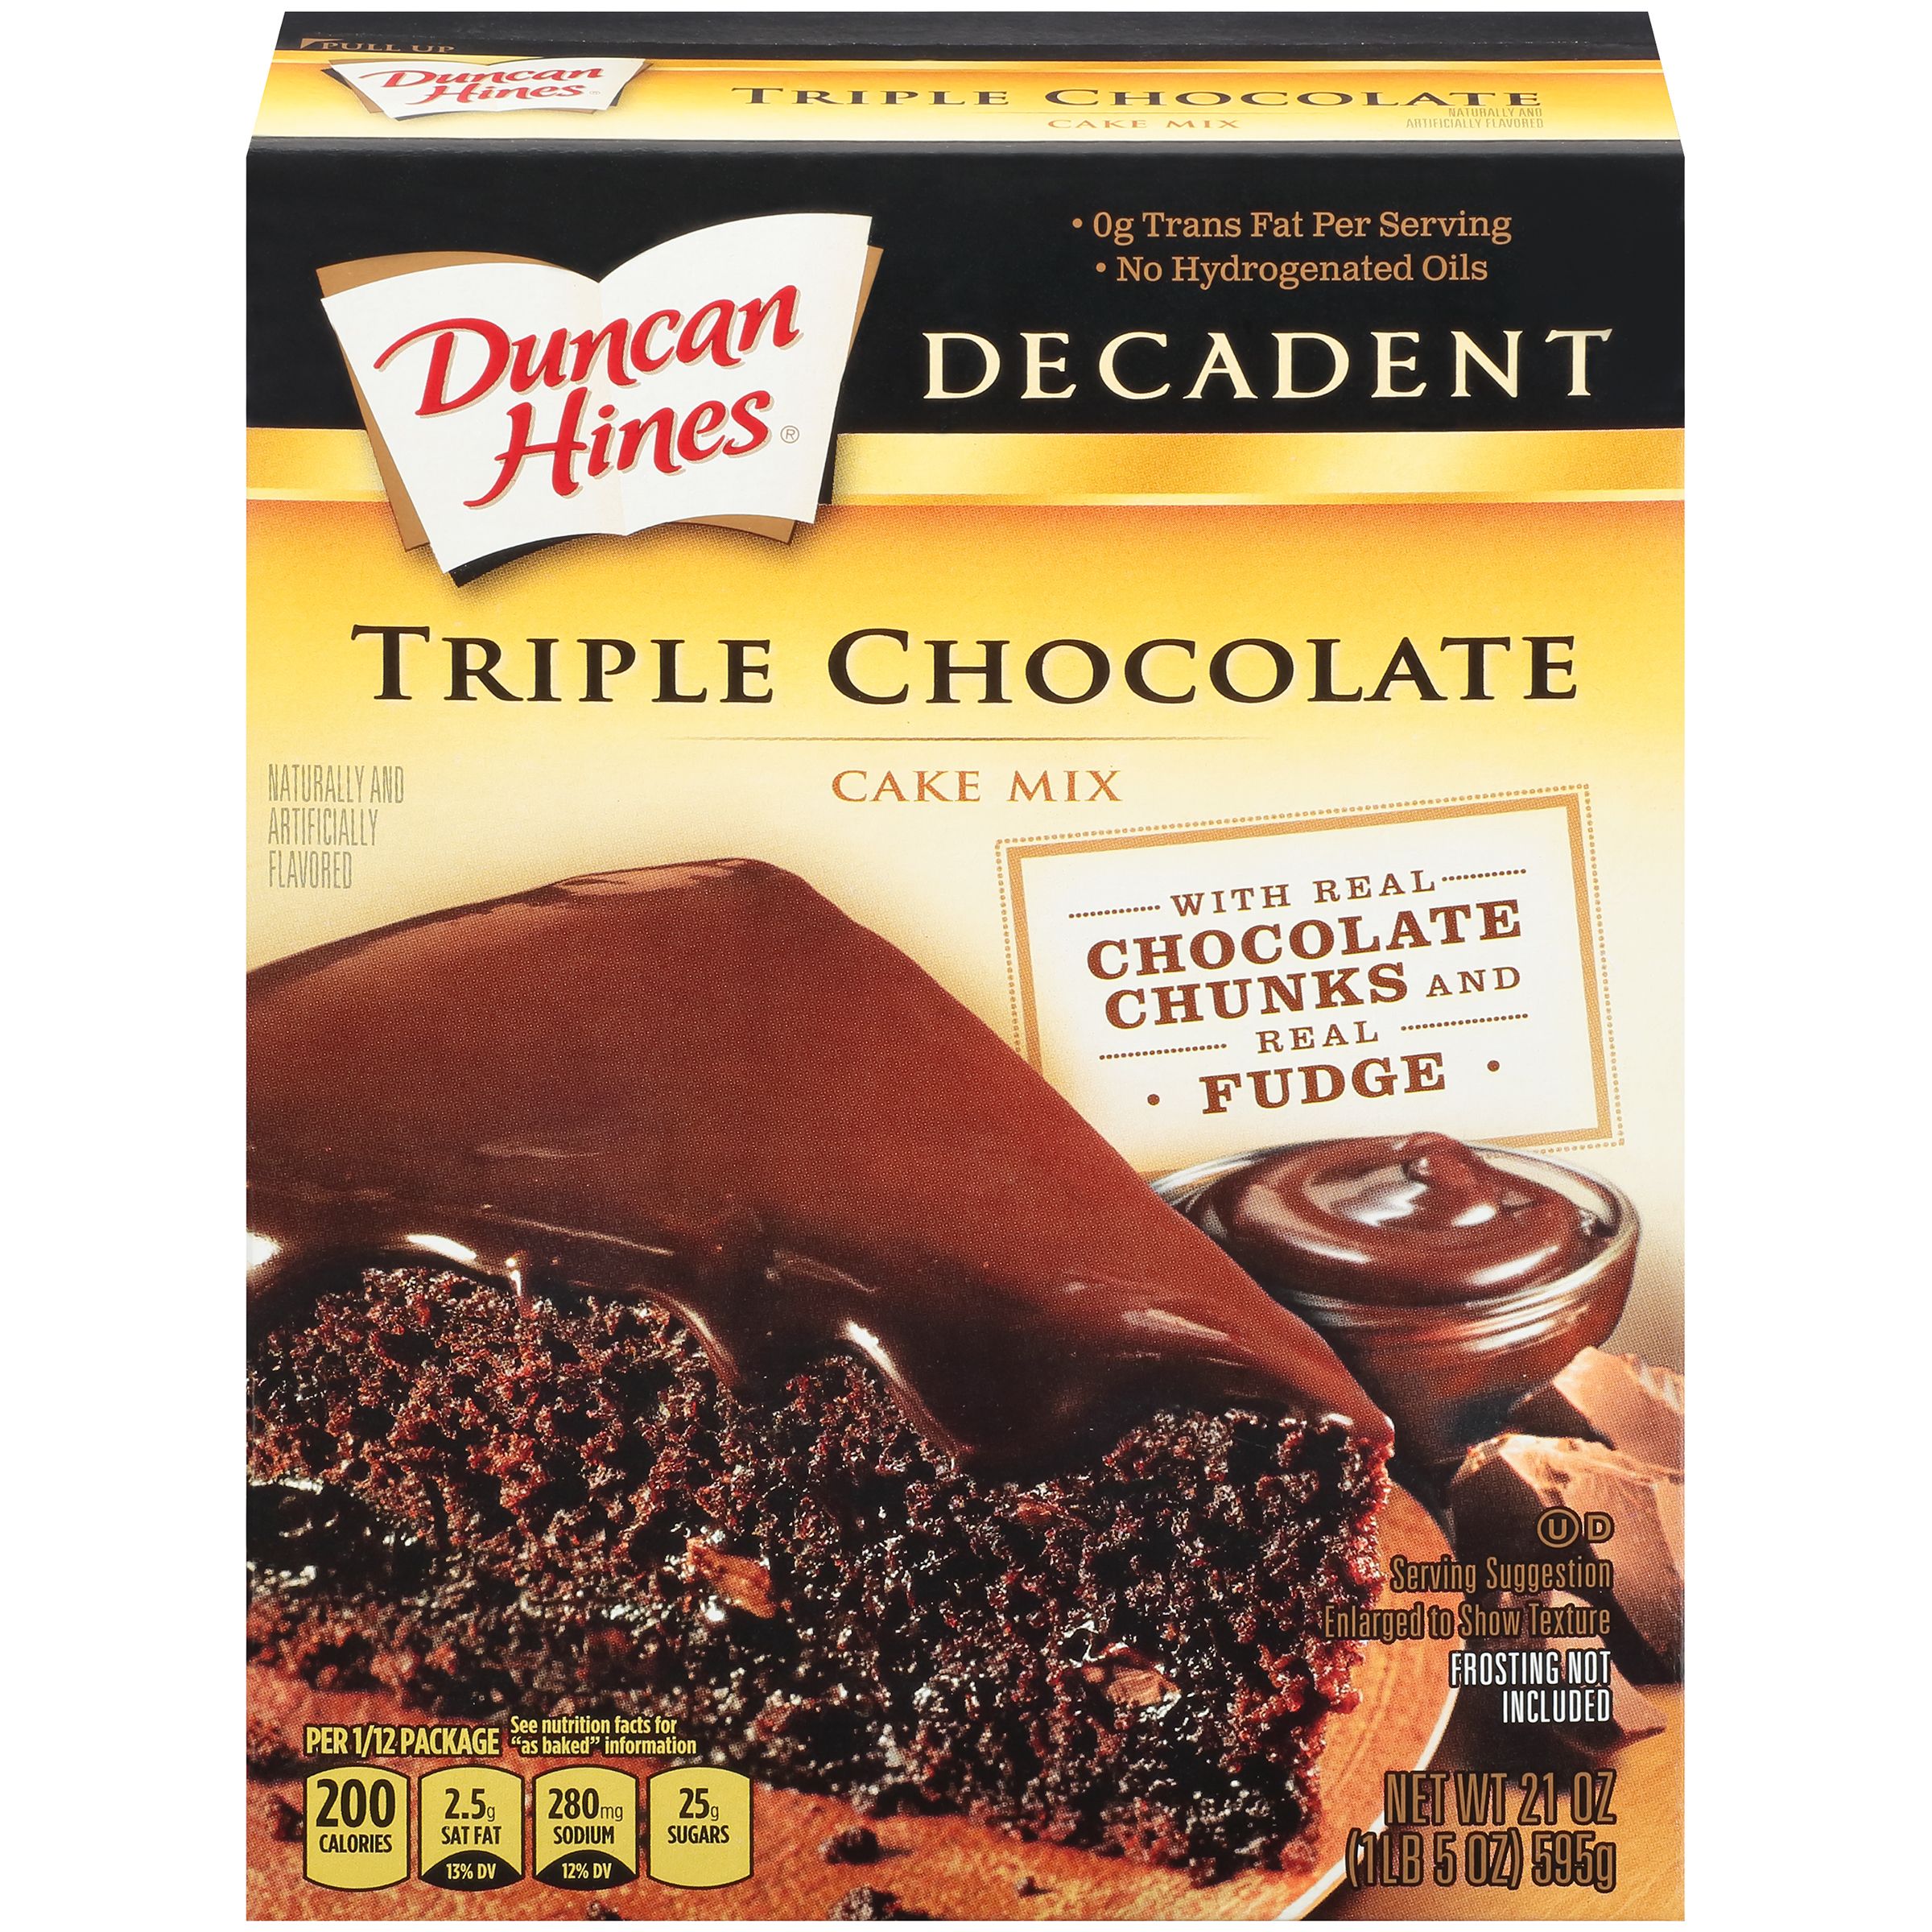 Duncan Hines Decadent Triple Chocolate Cake Mix 21 oz Box - image 5 of 8